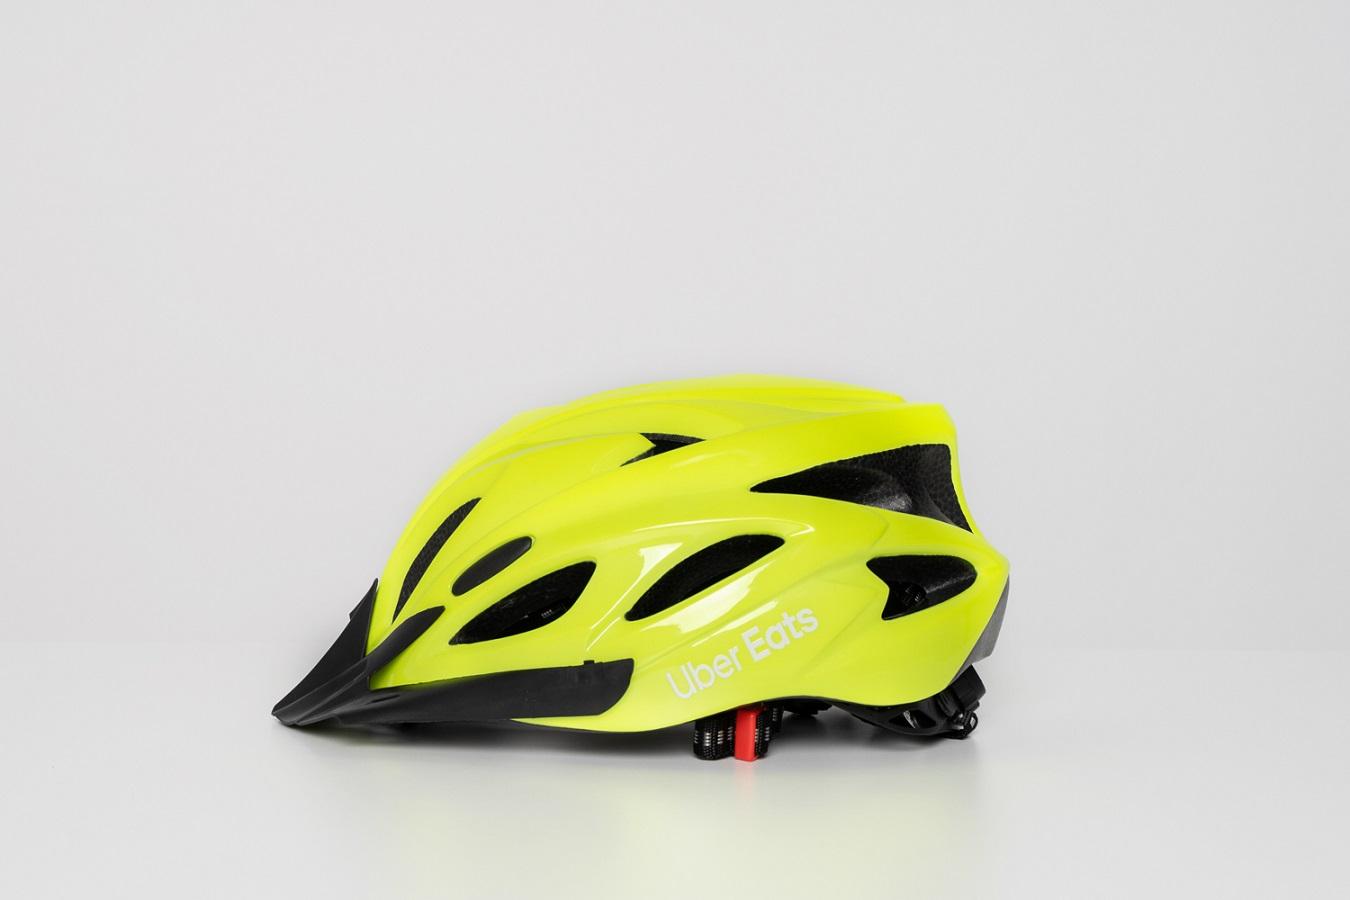 Mochila Cúbica + Kit de segurança para bicicletas + Capacete de bicicleta + Casaco refletor